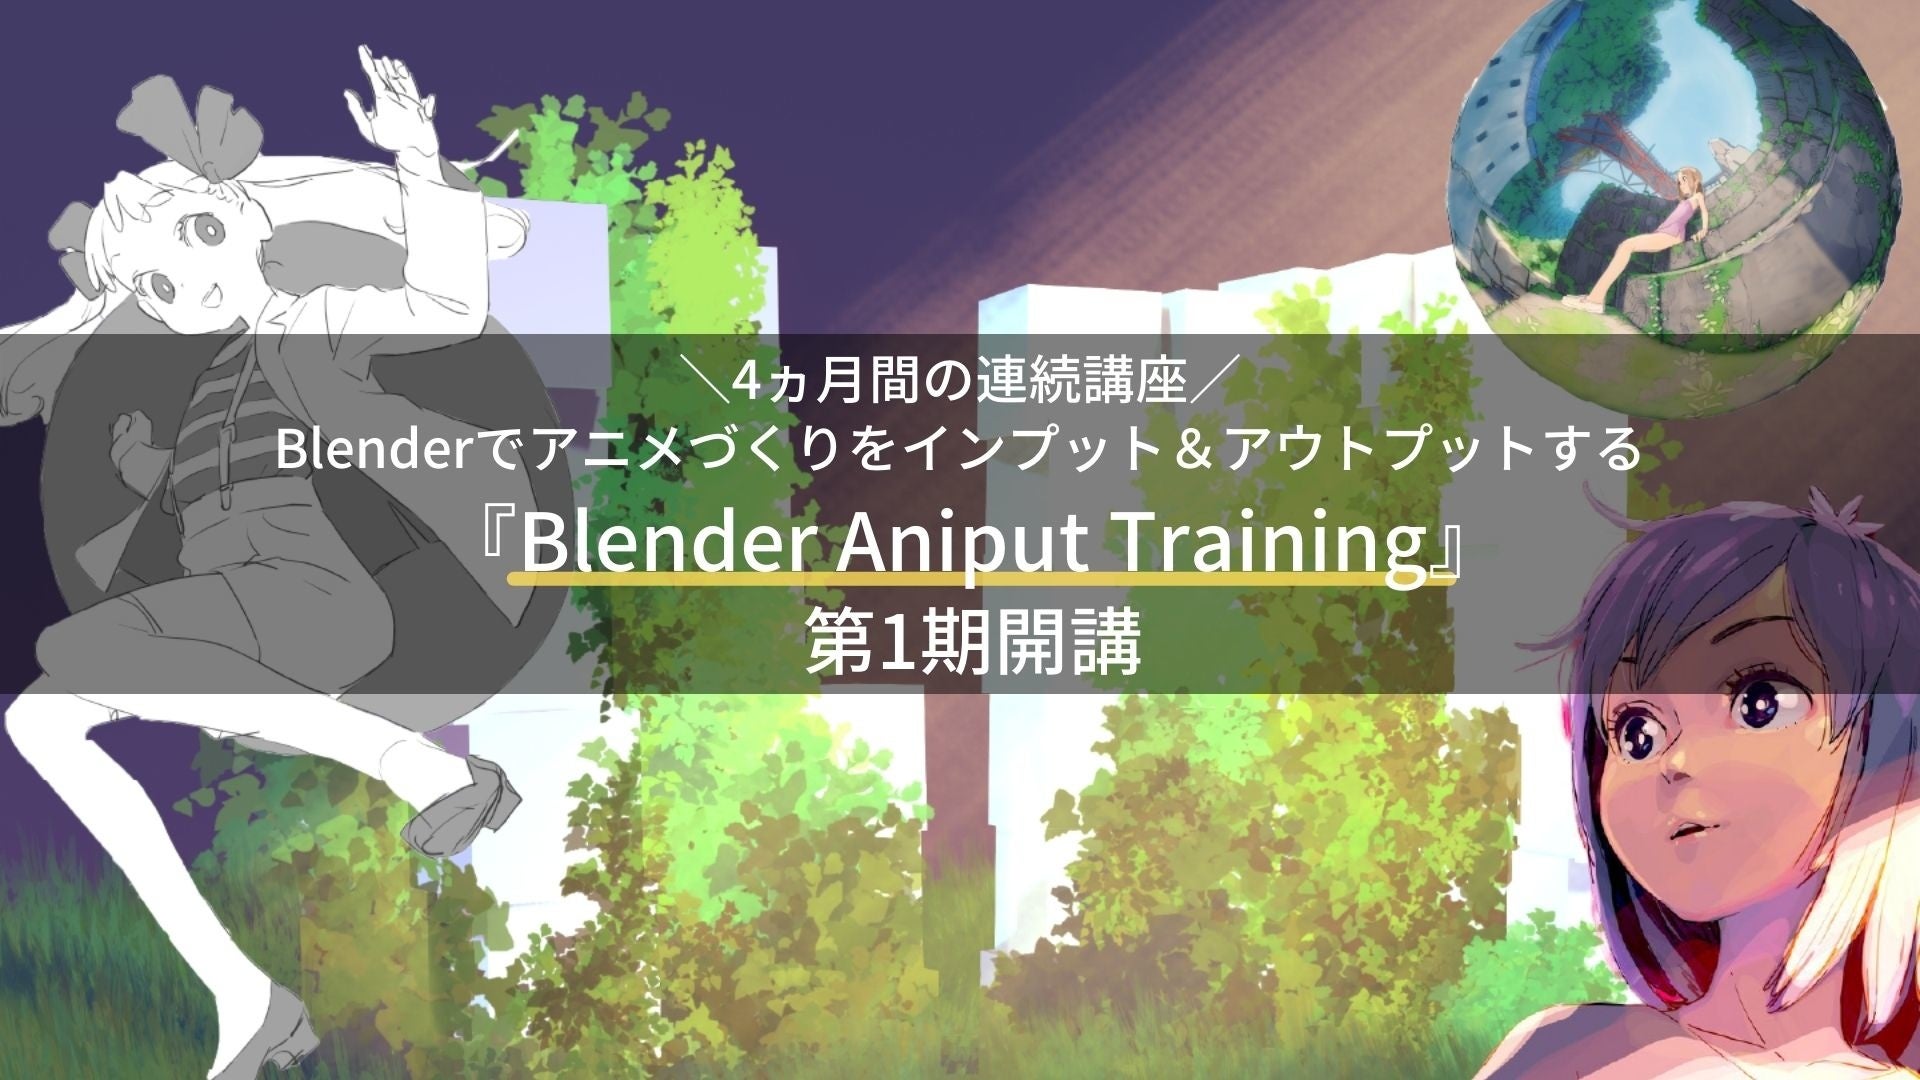 Blenderを活用して2Dと3Dを組み合わせたアニメーションスキルを身につける『Blender Aniput Training』を初開講